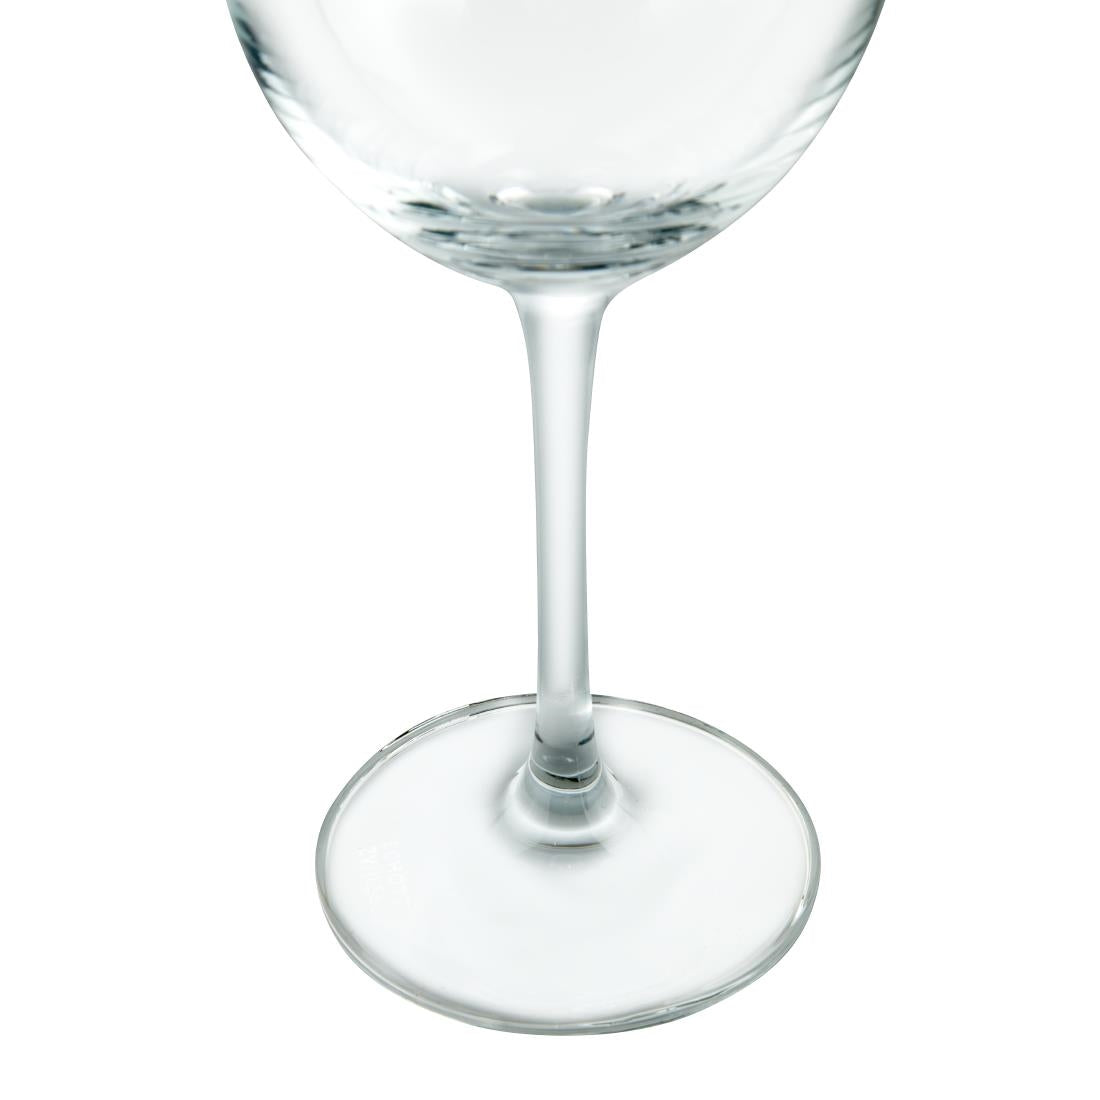 Schott Zwiesel Ivento White Wine glass 340ml (Pack of 6)